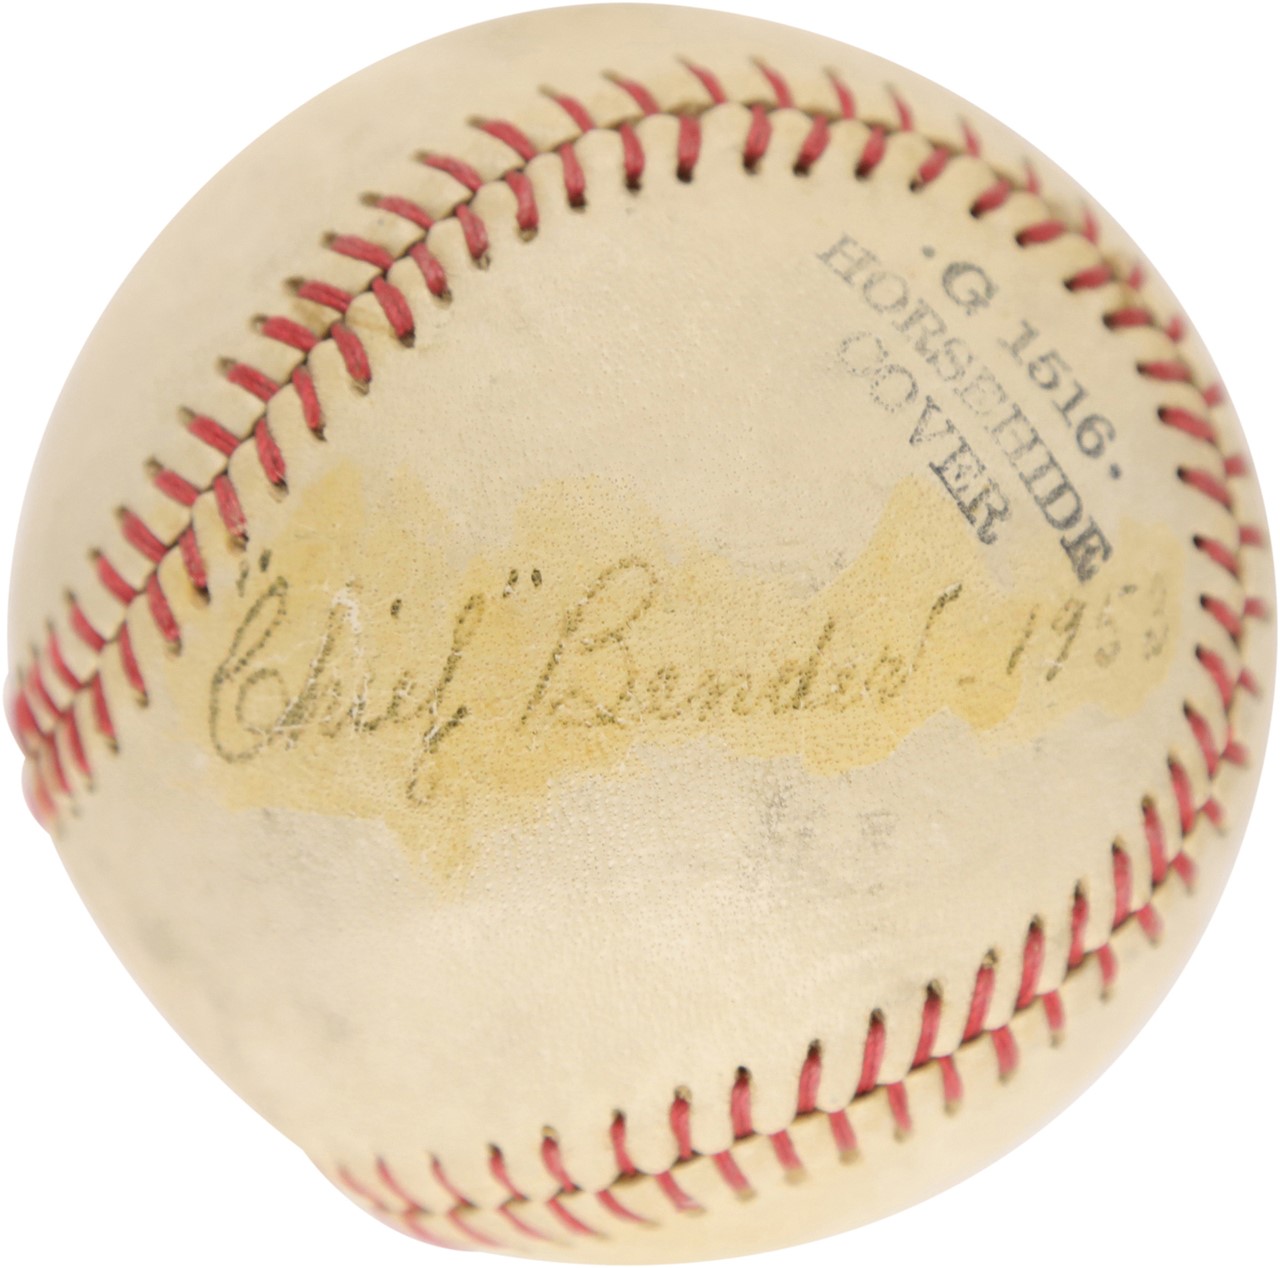 - Chief Bender Single-Signed Baseball (JSA)